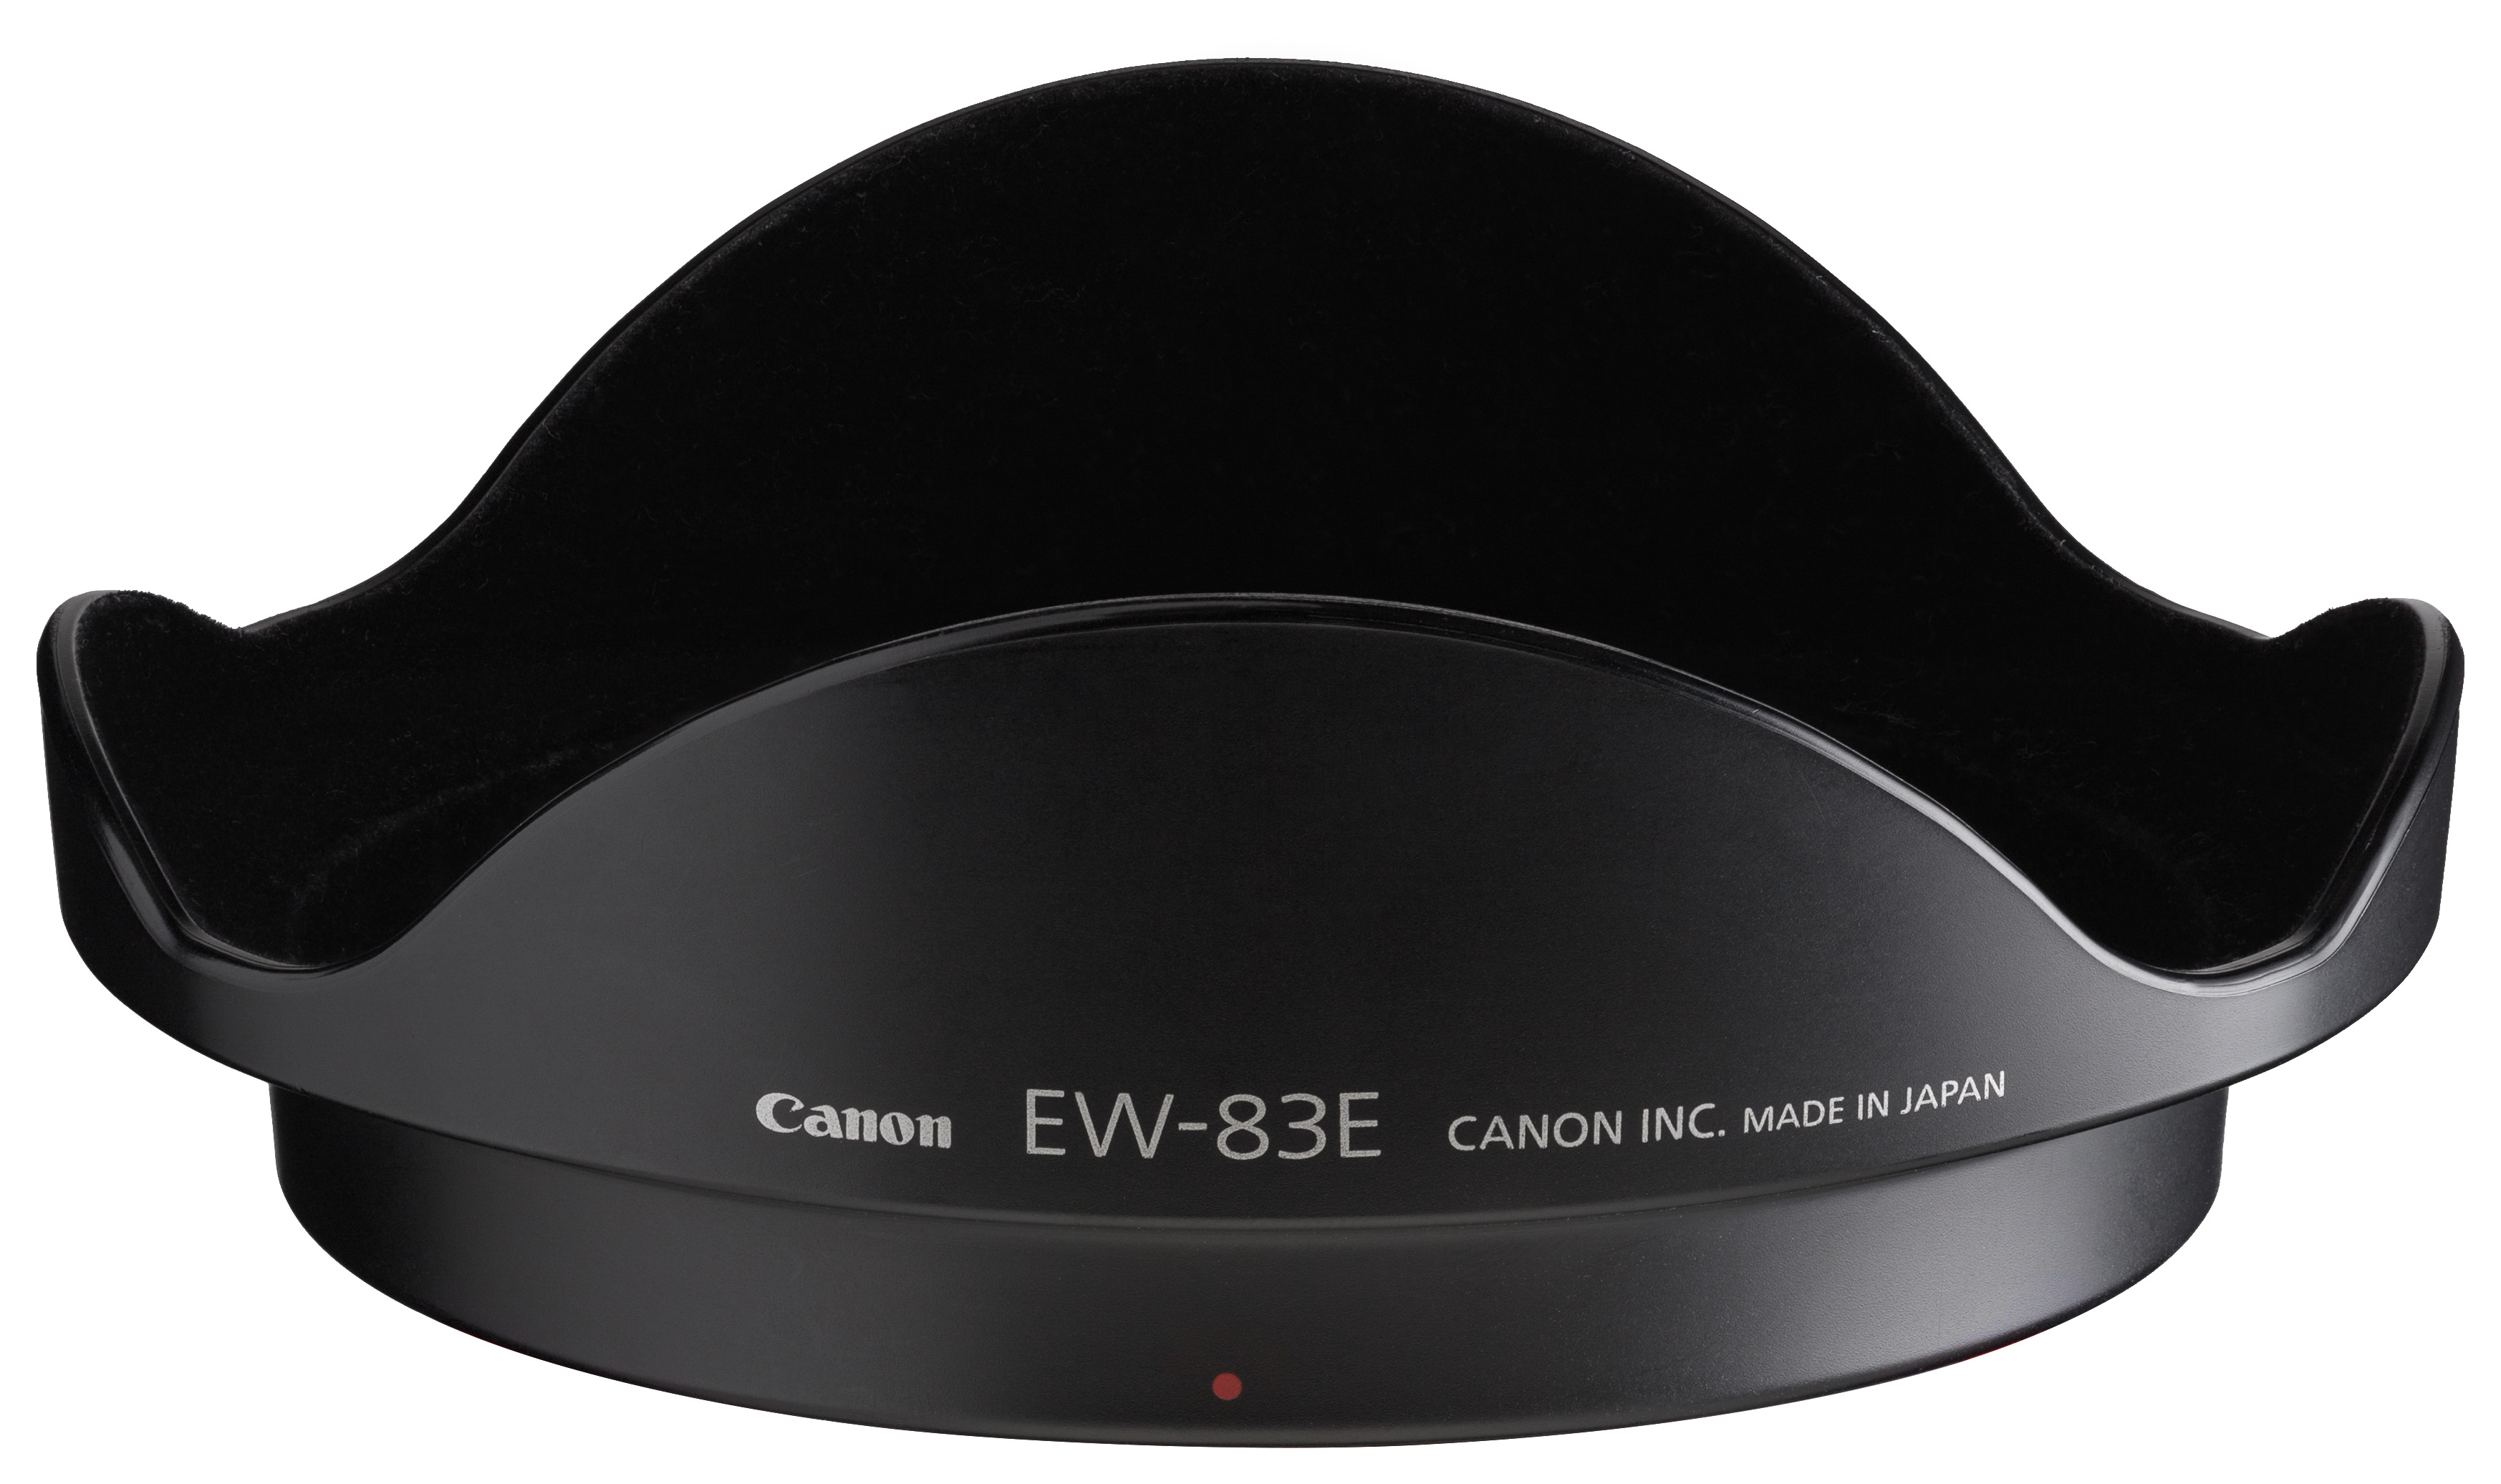 Canon EW-83E front angled